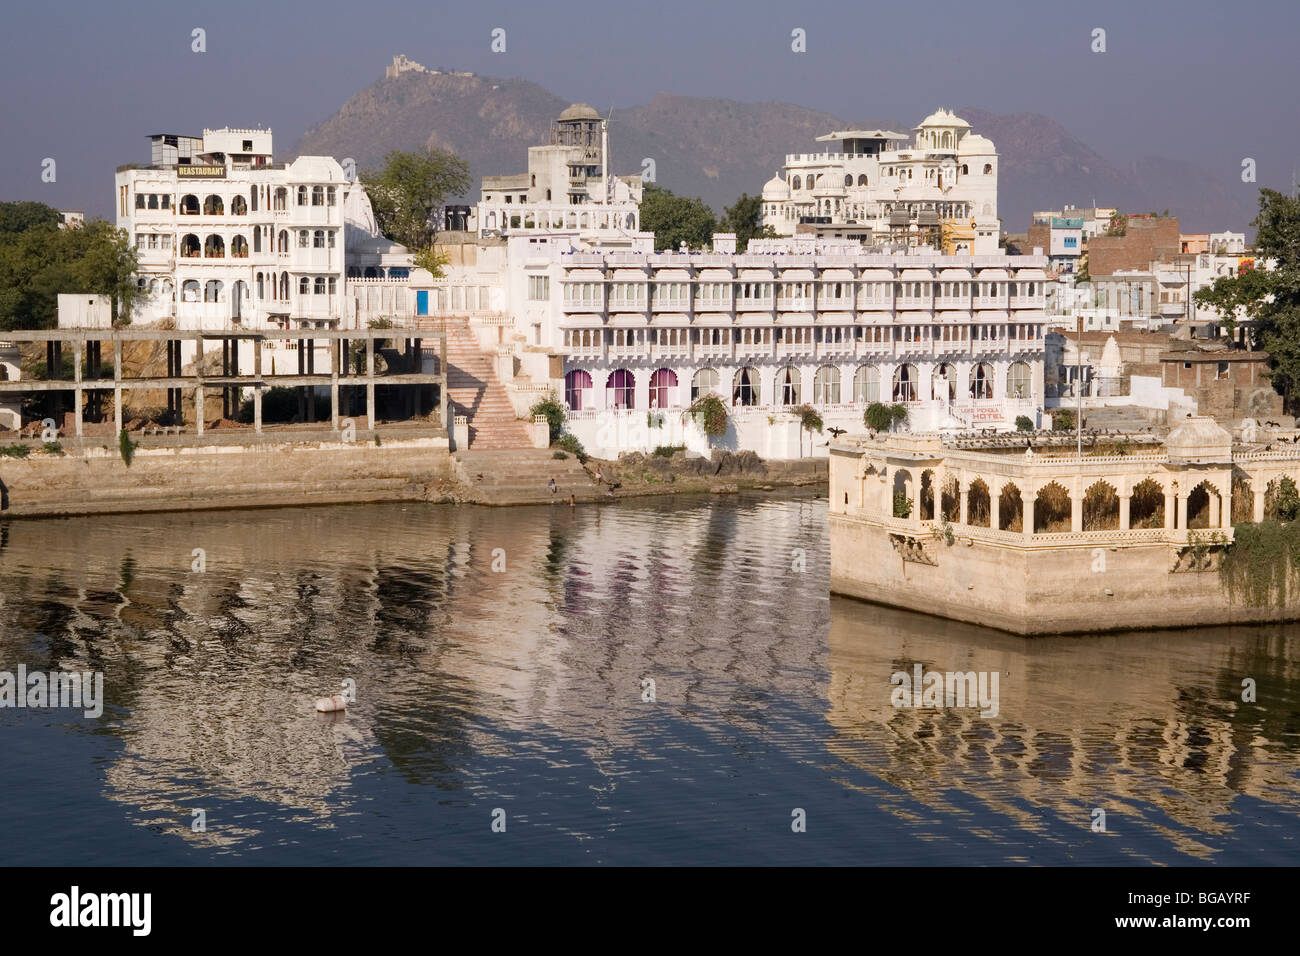 La India Rajasthan Udaipur LAKE PICHOLA HOTEL & vista lejana del palacio de monzón Foto de stock